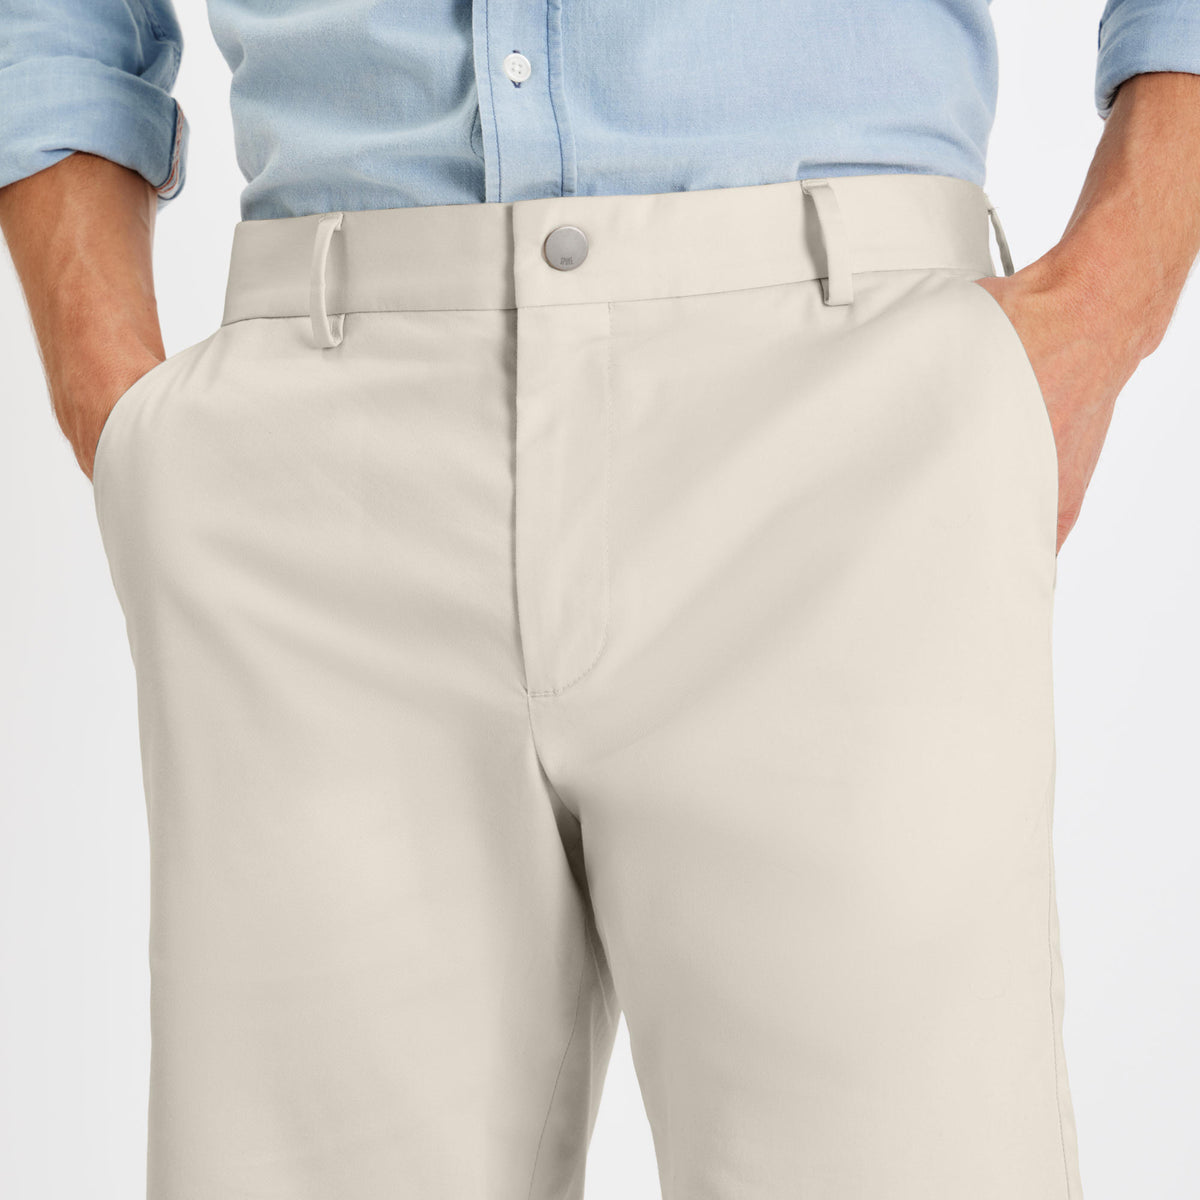 Birch Sharp Shorts - Men's Tailored Shorts - SPOKE - SPOKE